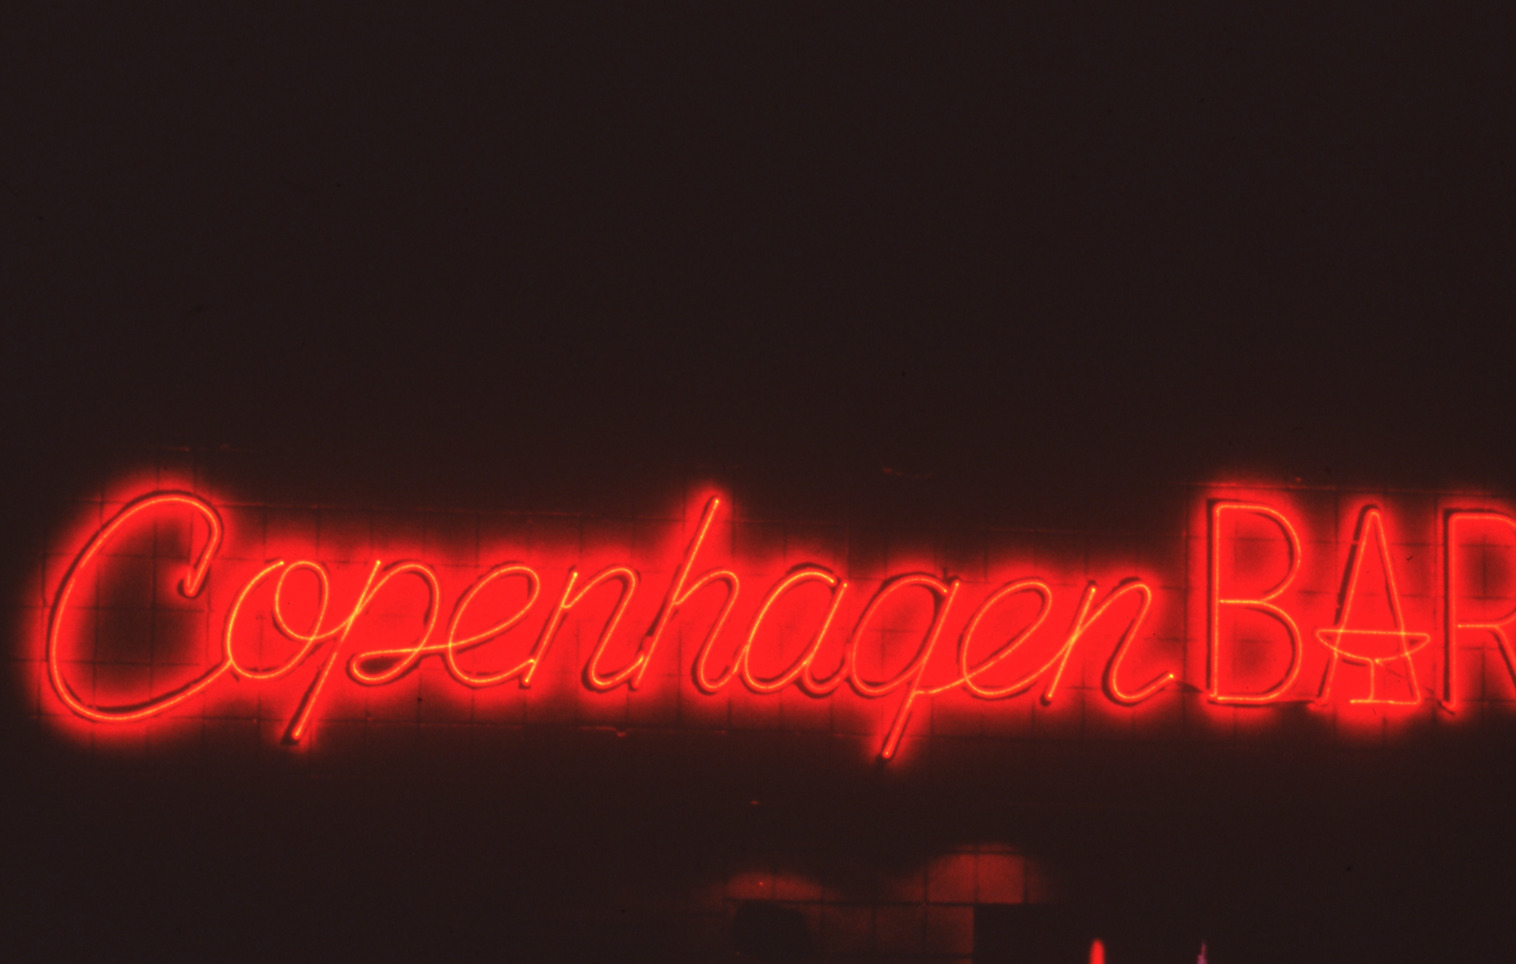 Copenhagen Bar sign, Sparks, Nevada: photographic print